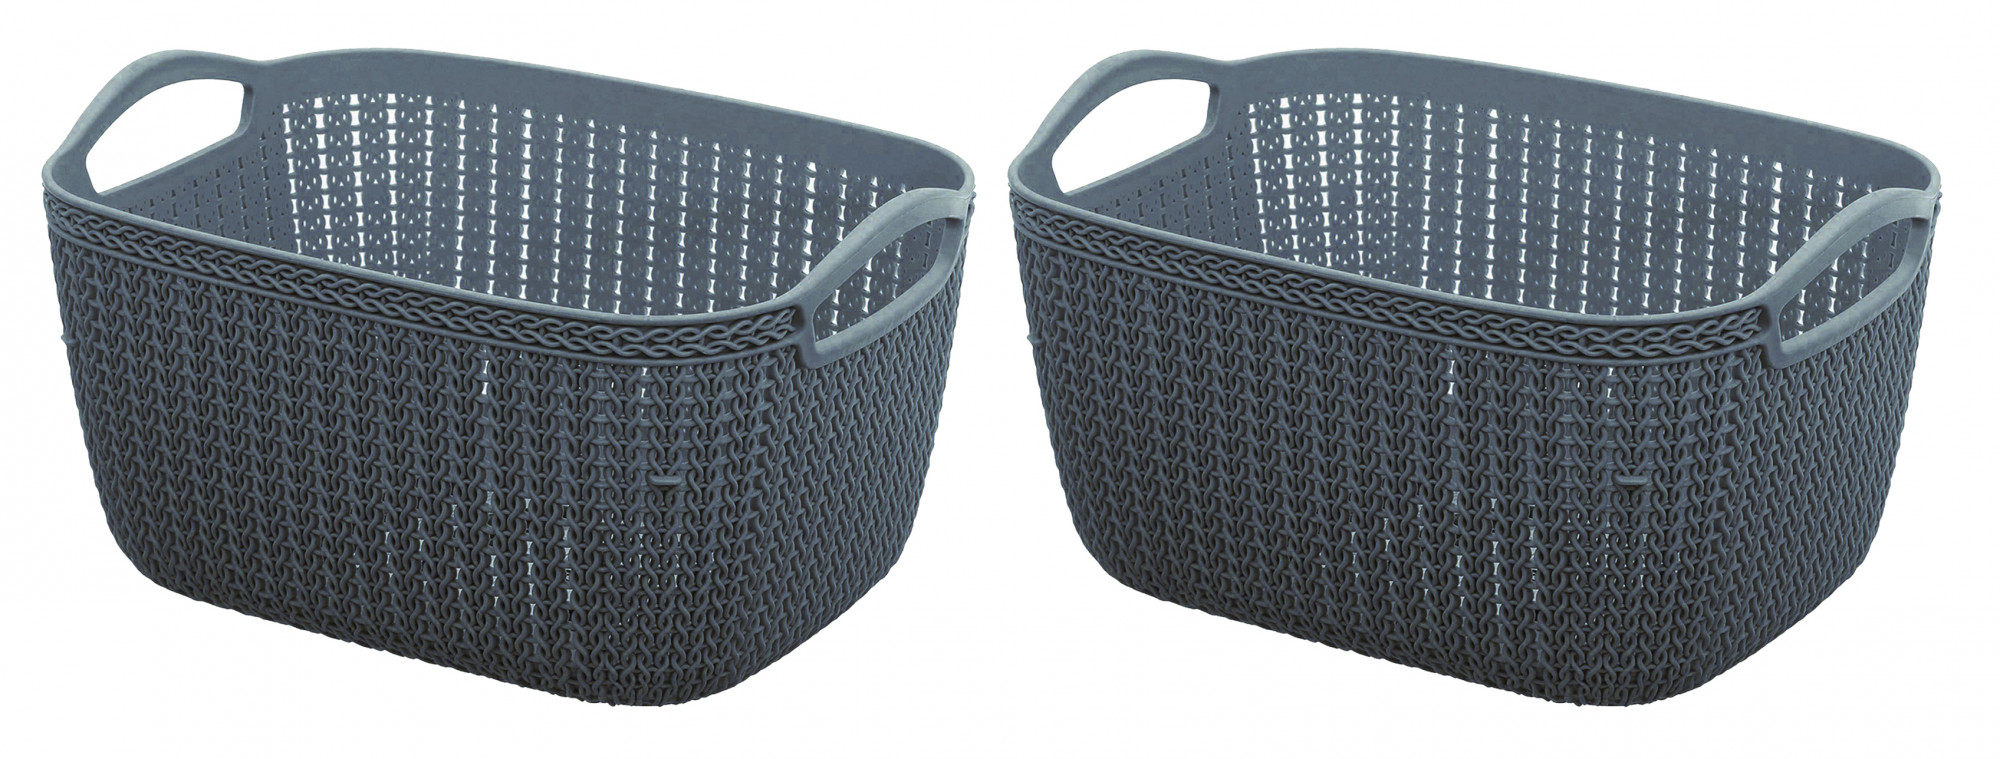 Kuber Industries Q-5 Unbreakable Plastic Multipurpose Medium Size Flexible Storage Baskets/Fruit Vegetable Bathroom Stationary Home Basket with Handles (Grey)